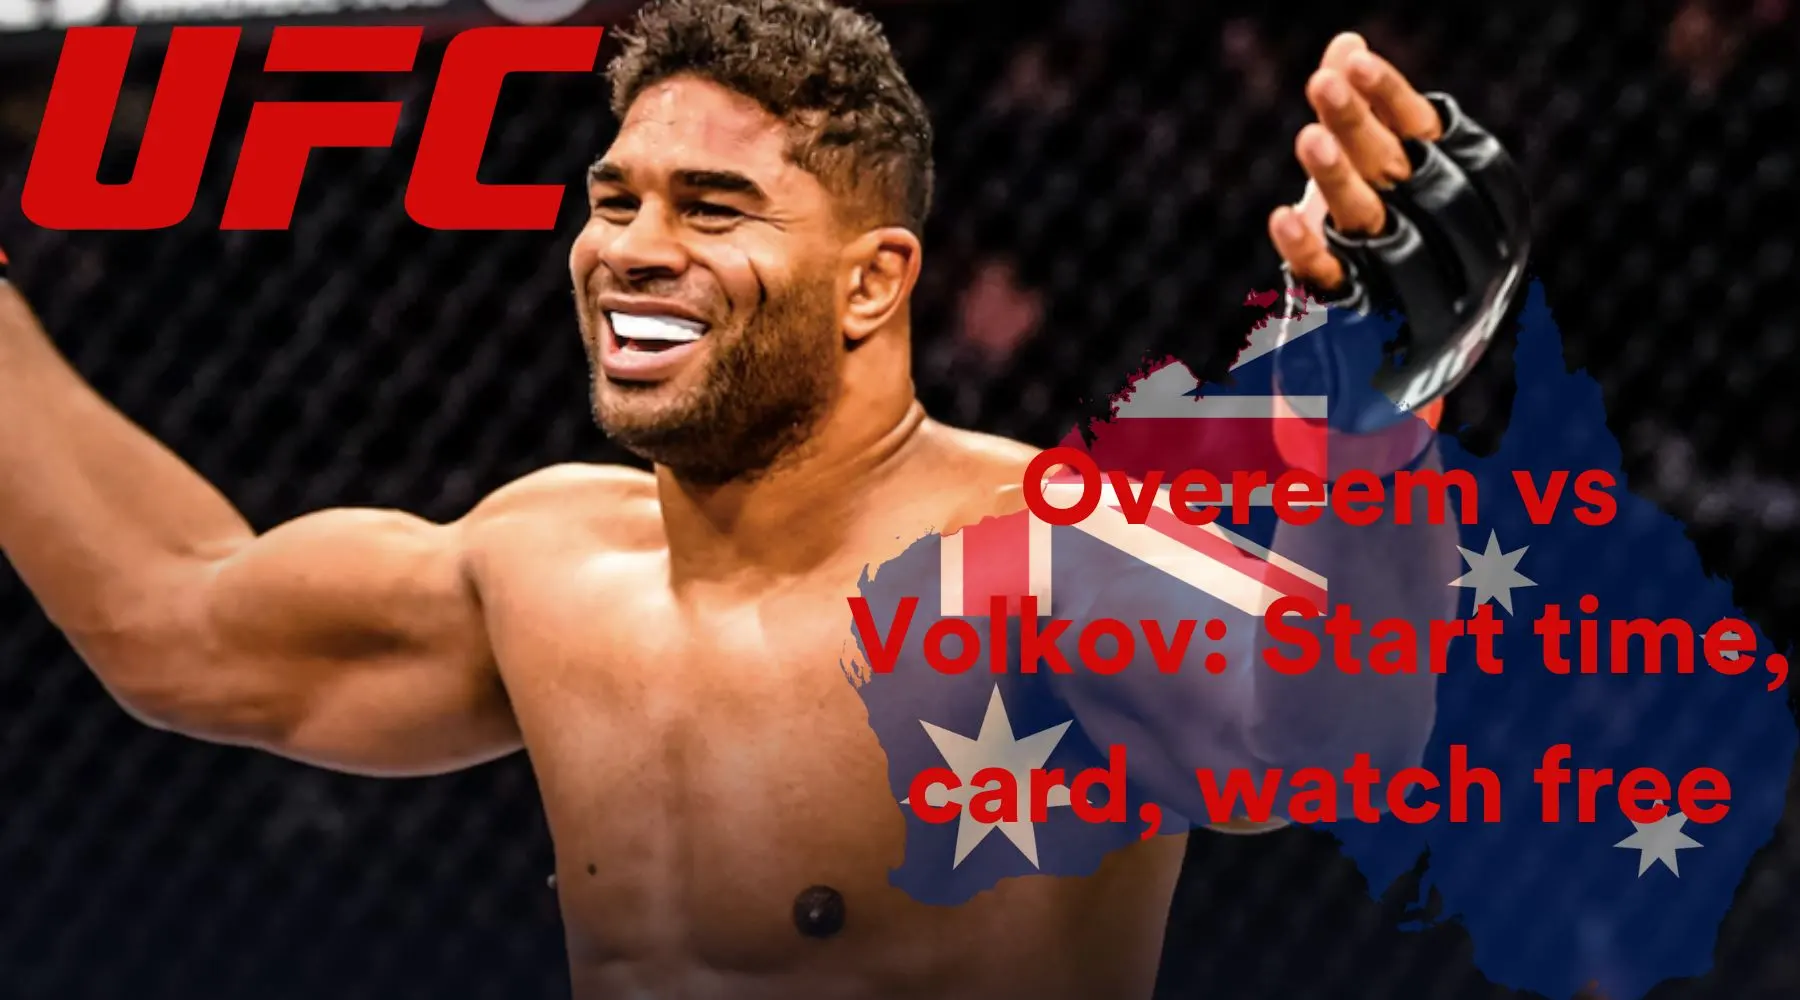 Overeem vs Volkov Watch free in Australia, start time, fight card